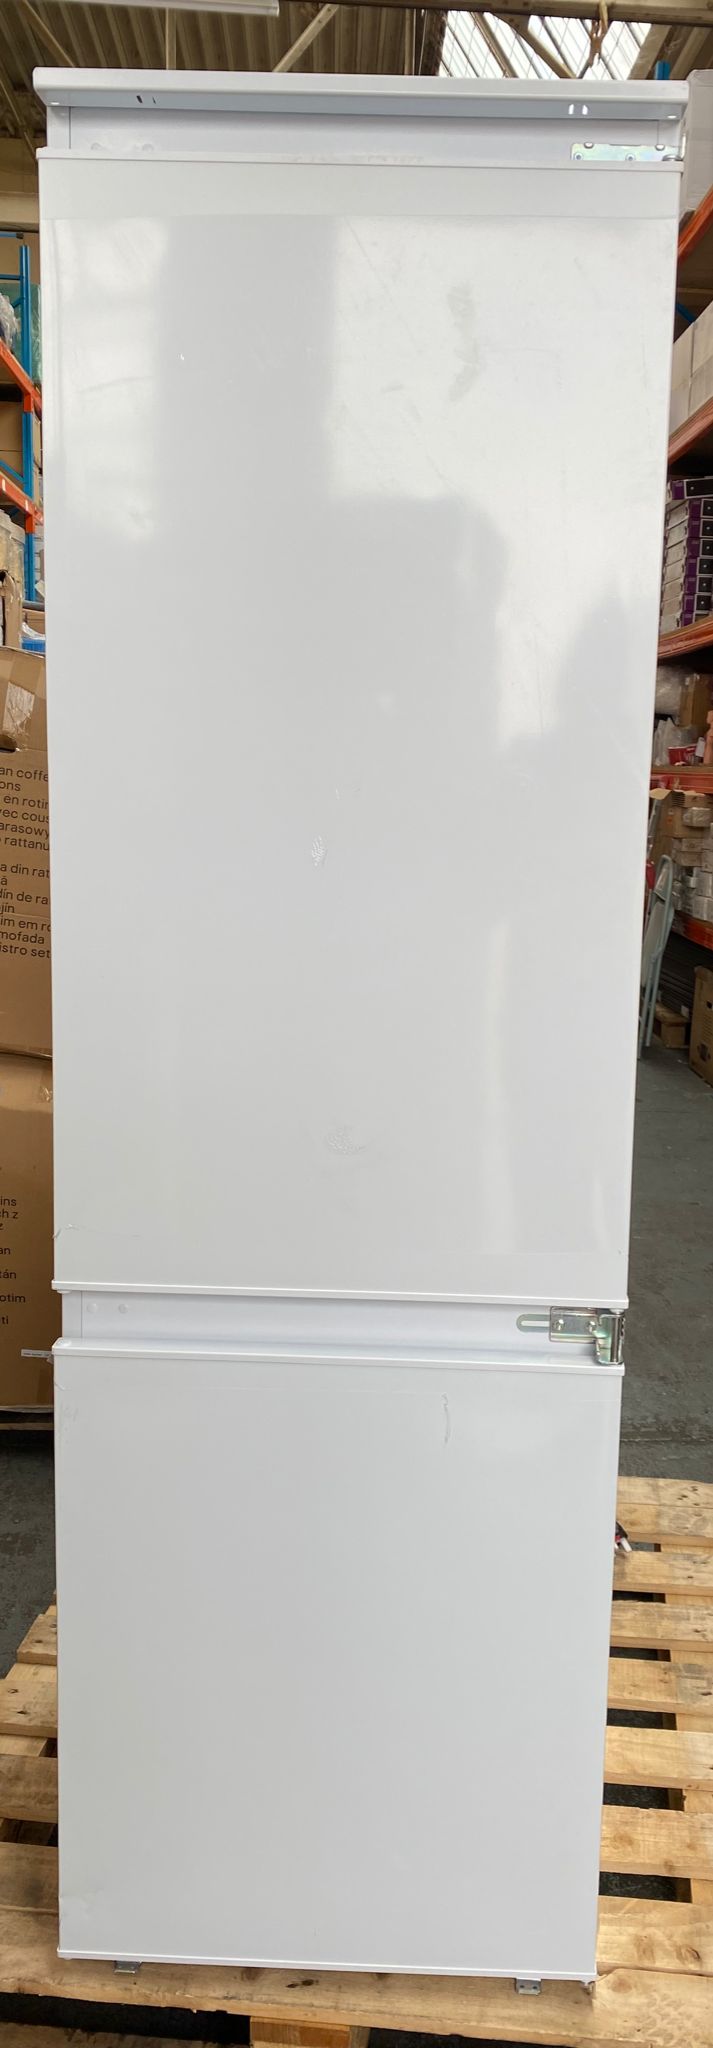 GoodHome Automatic defrost Fridge freezer Integrated-White-GHBI7030FFUK-7213